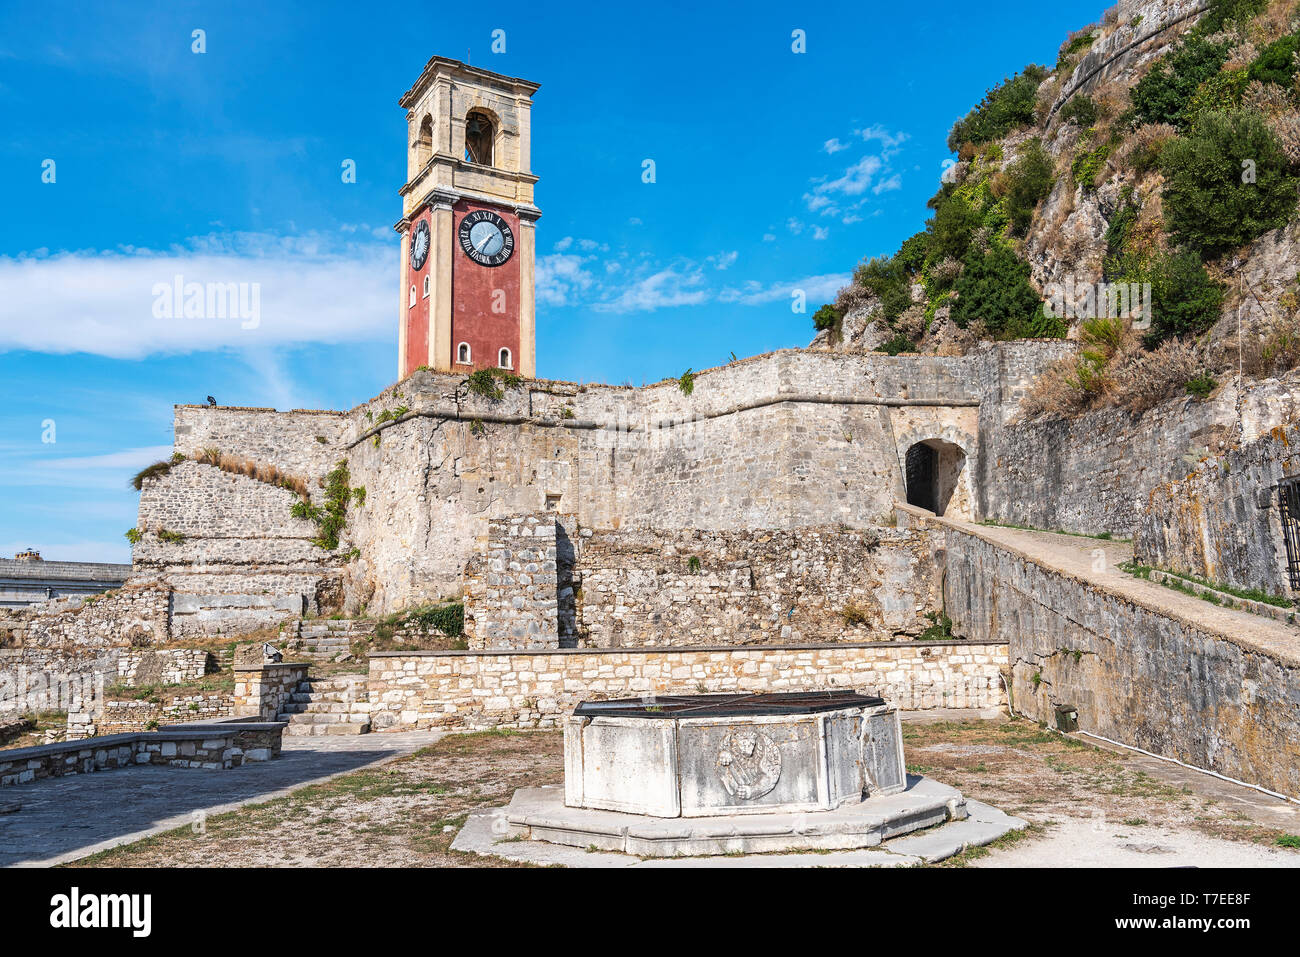 Bell Tower, Tour, ancienne forteresse, Kerkyra, Corfou, îles Ioniennes, Grèce Banque D'Images